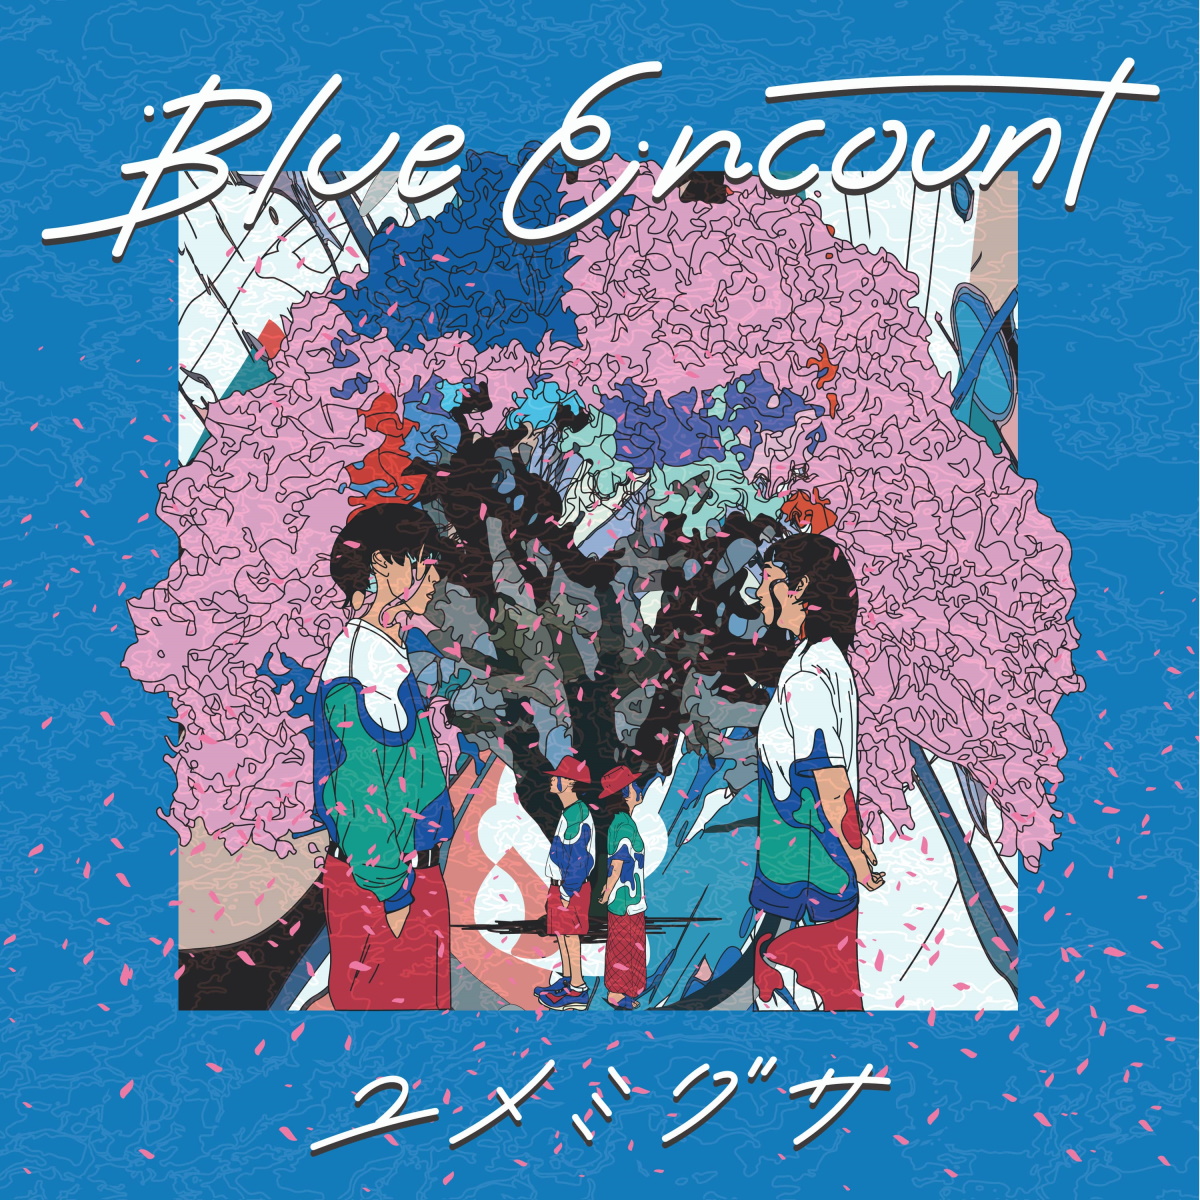 『BLUE ENCOUNT - 終火』収録の『終火』ジャケット